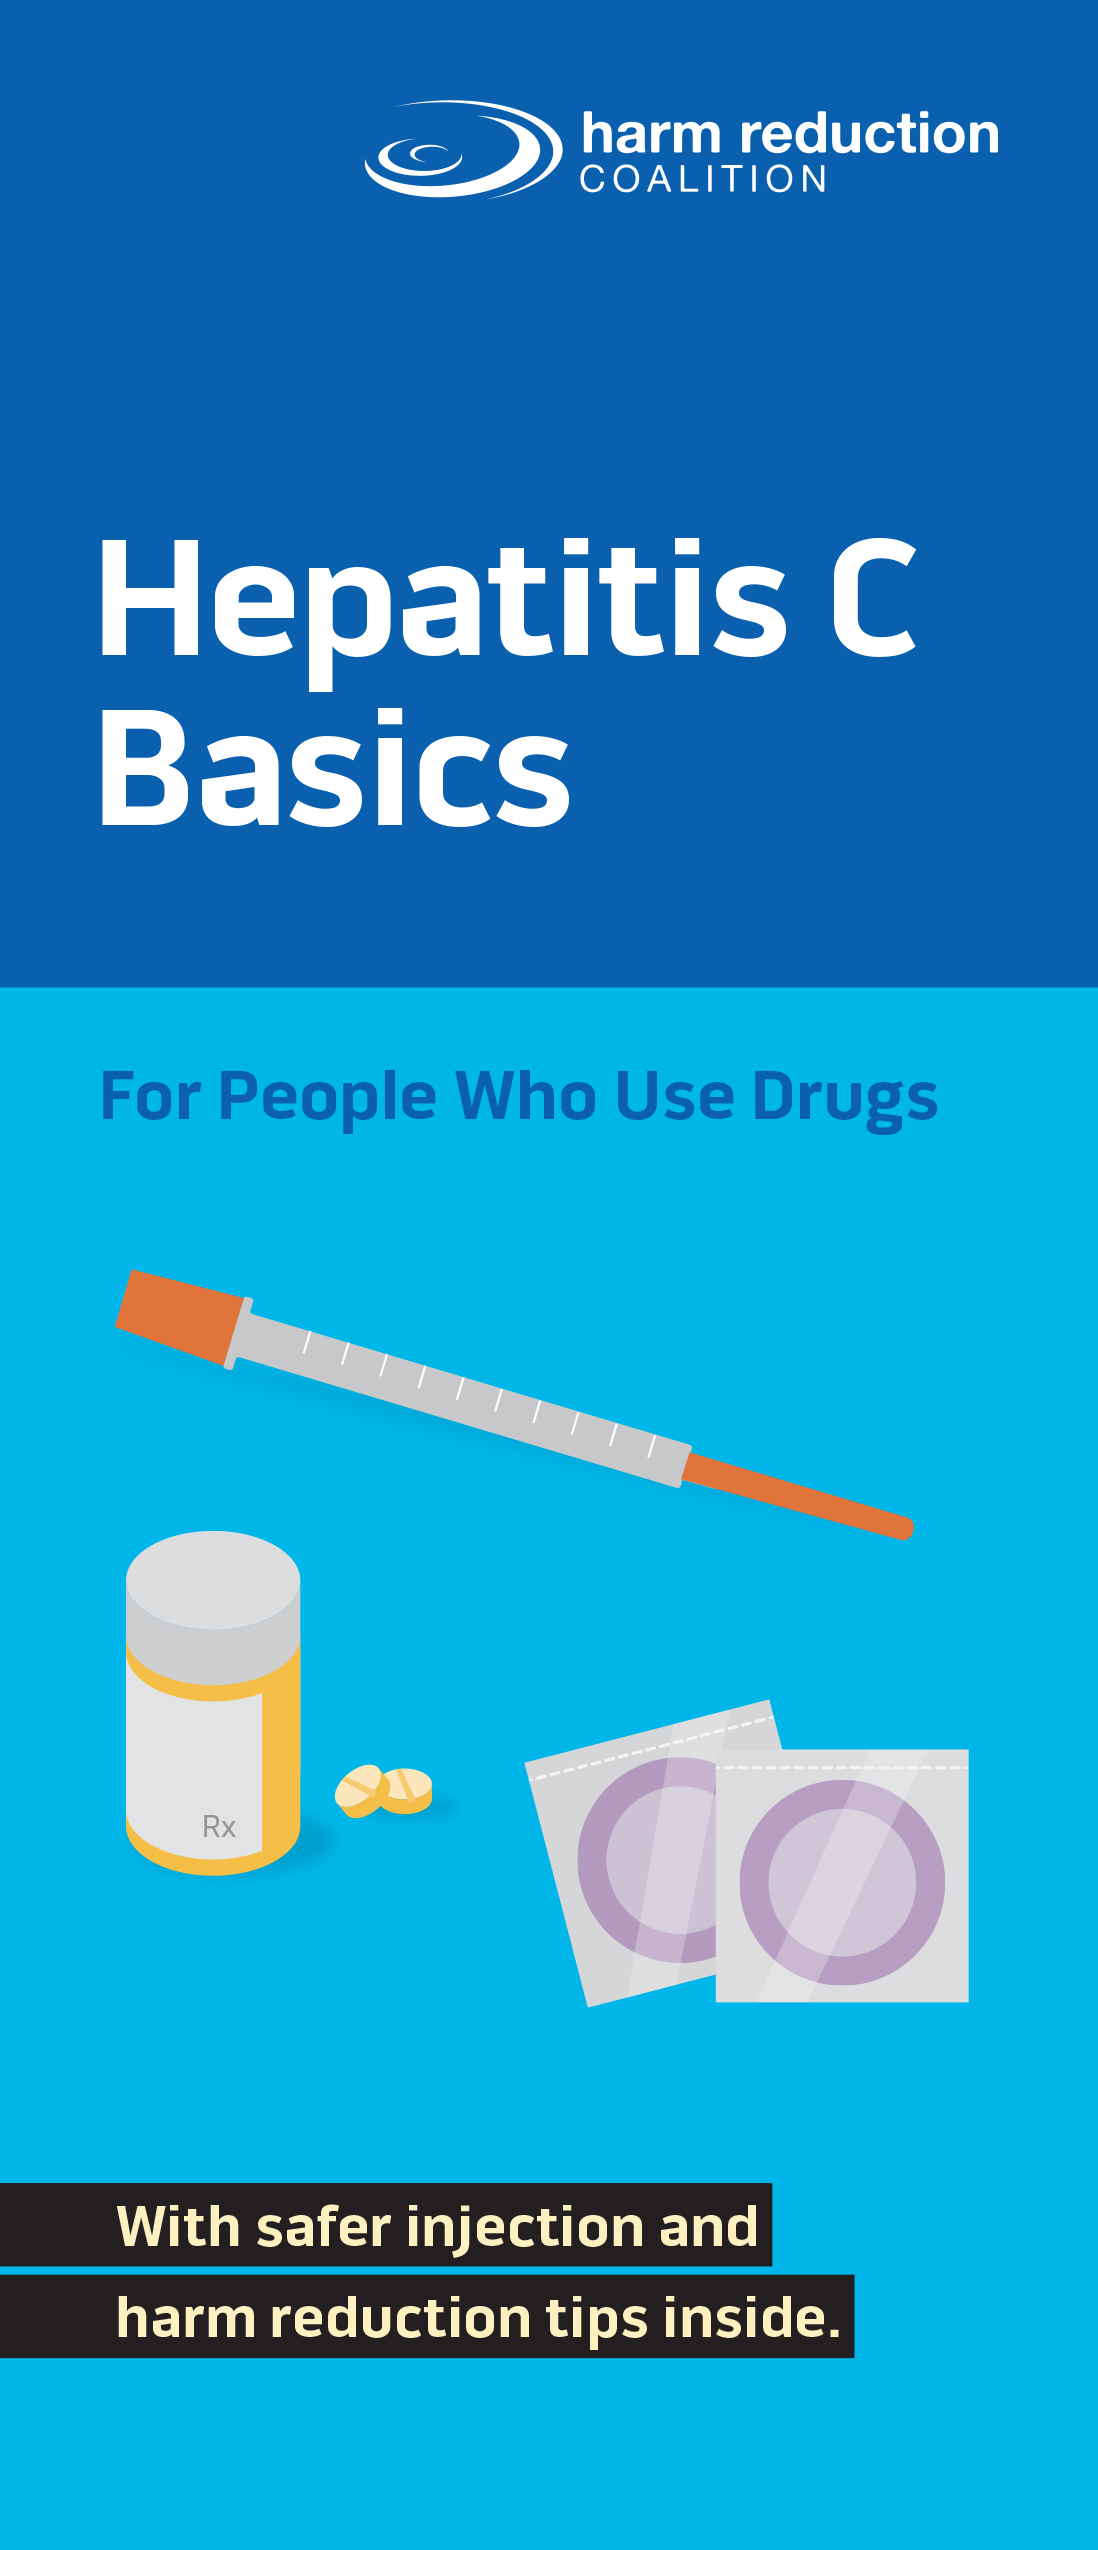 Hepatitis C Basics booklet cover